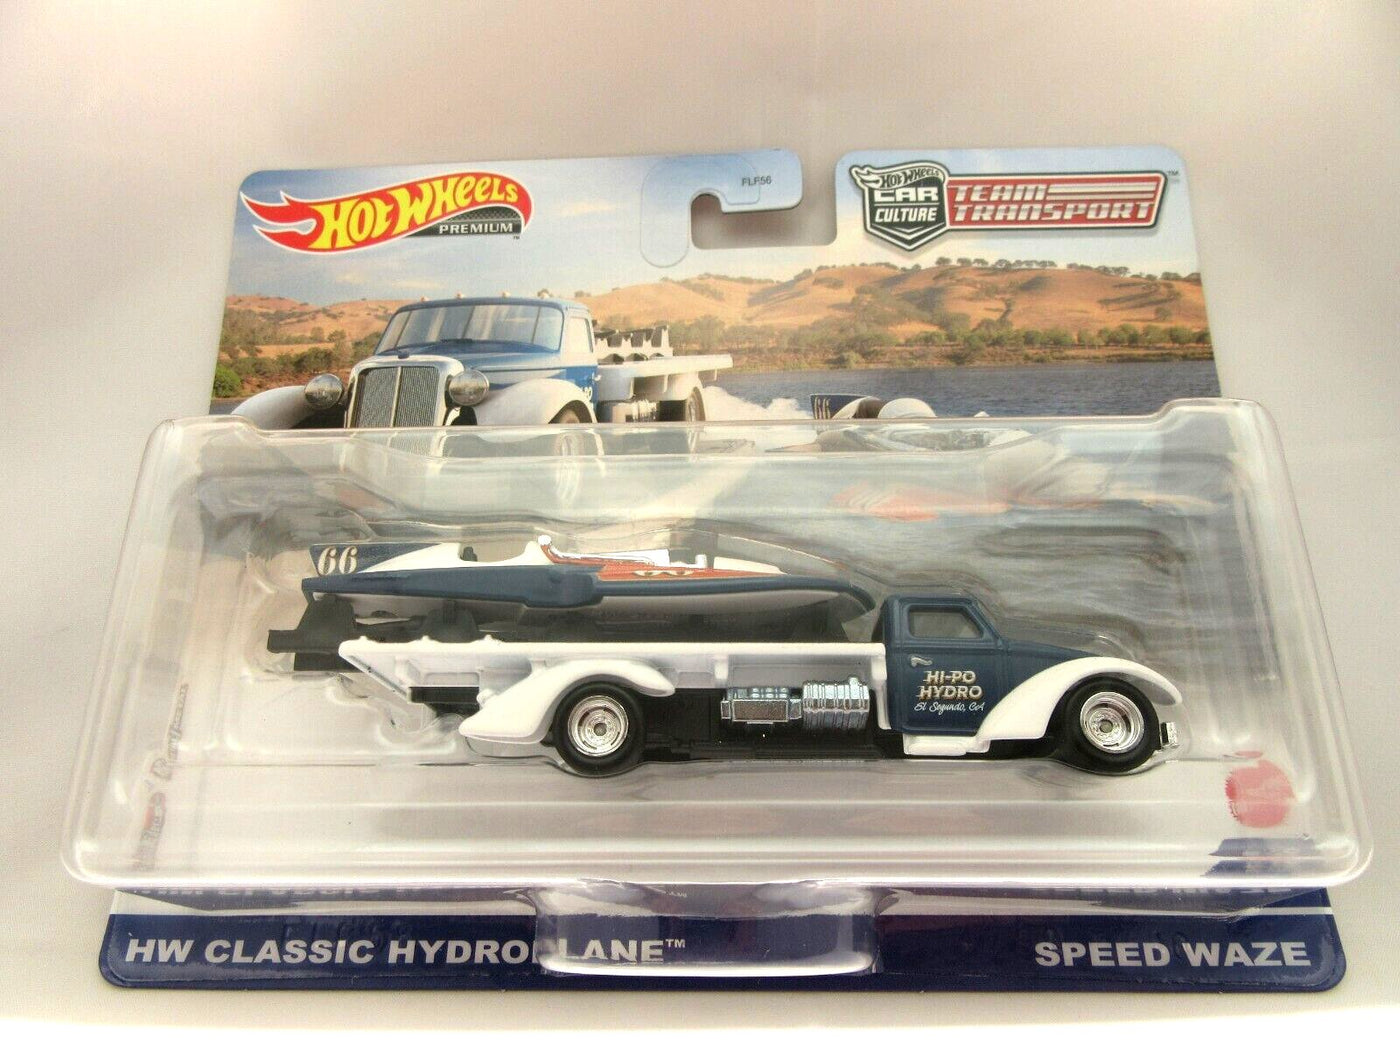 HW Classic Hydroplane Speed Waze ~ Hot wheels ~ Team Transport